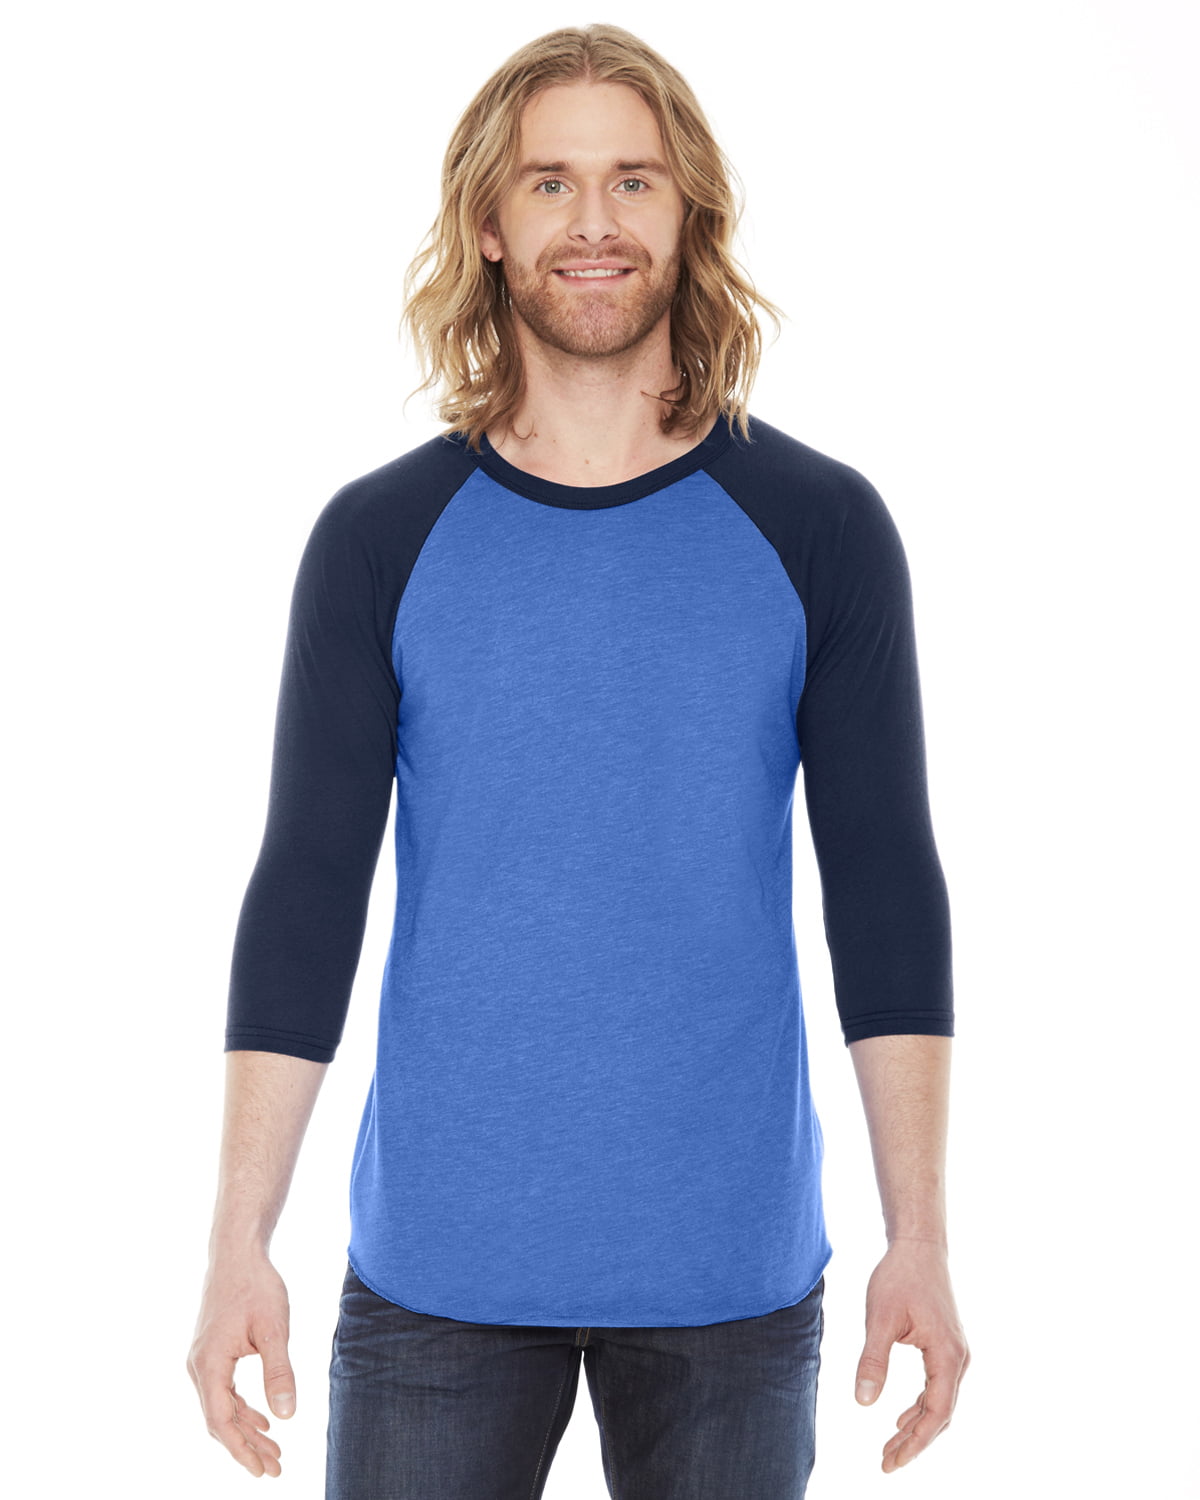 Unisex Poly-Cotton 3/4 Sleeve Raglan T-shirt - Walmart.com